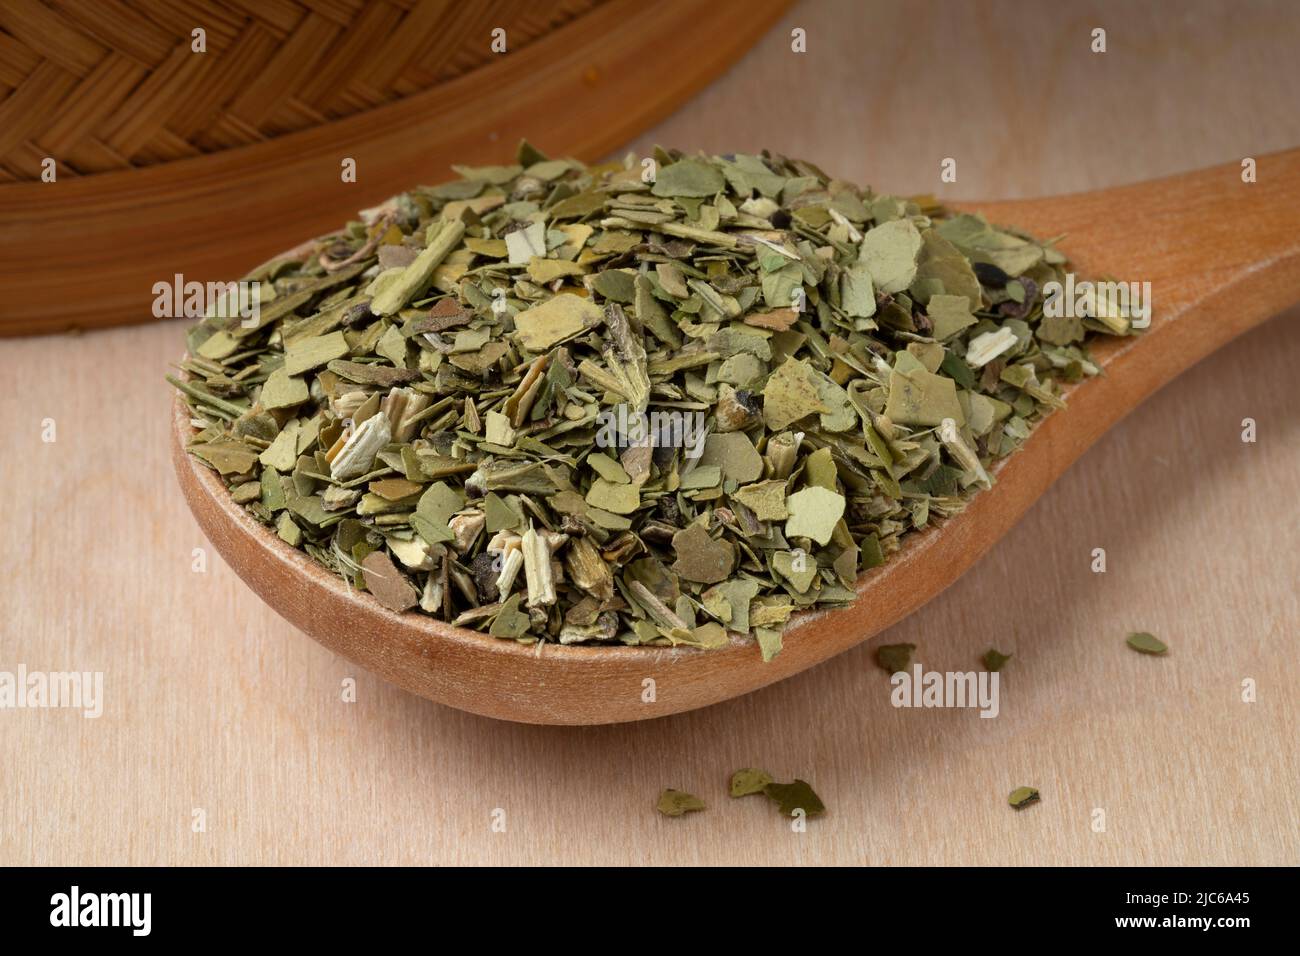 Cucchiaio di legno con caffeina tradizionale sudamericana secca ricca di tè Mate foglie da vicino Foto Stock